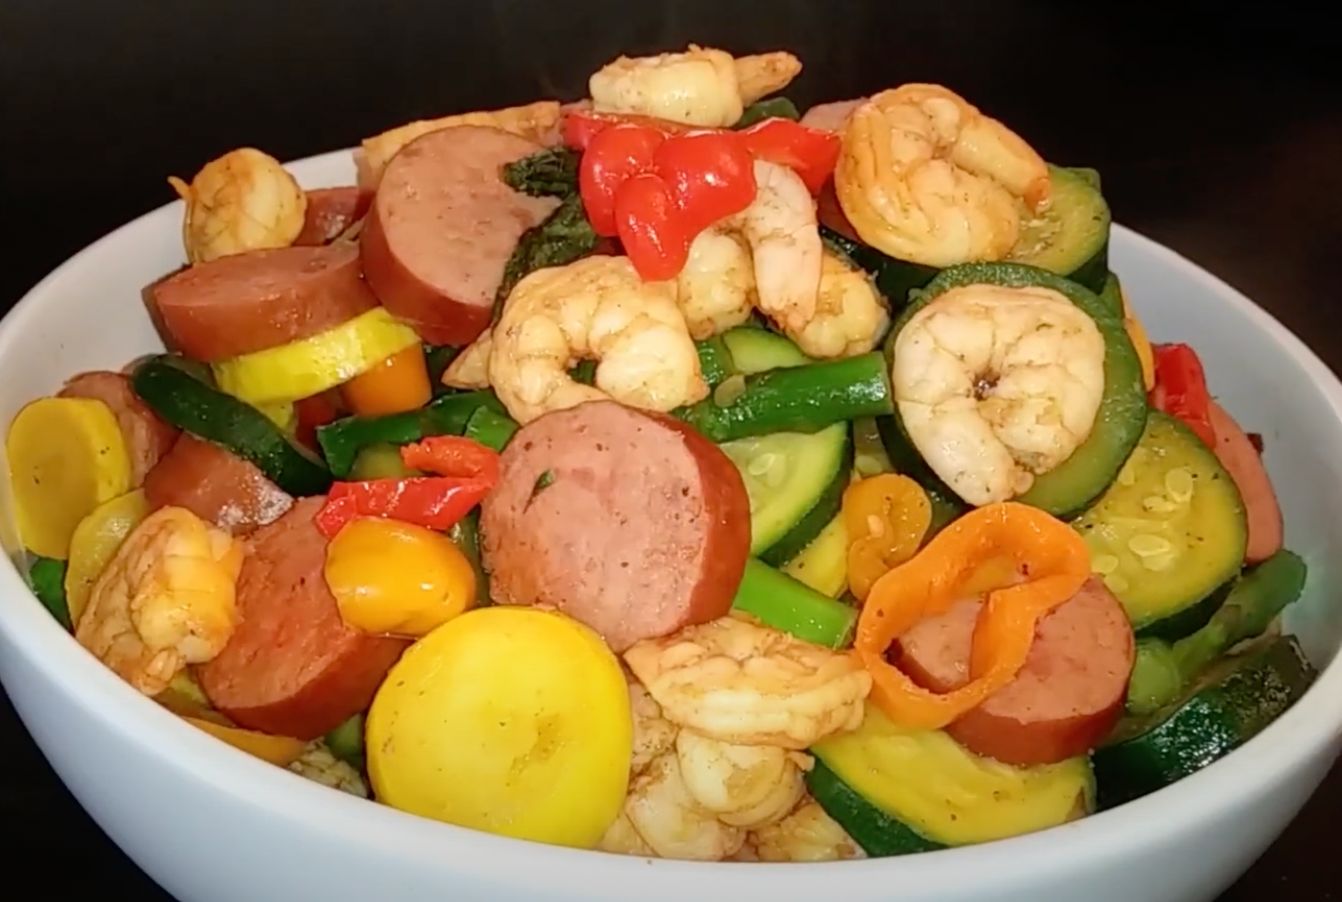 https://recipes.net/wp-content/uploads/portal_files/recipes_net_posts/2021-09/cajun-shrimp-sausage-vegetable-sheetpan-recipe.jpg